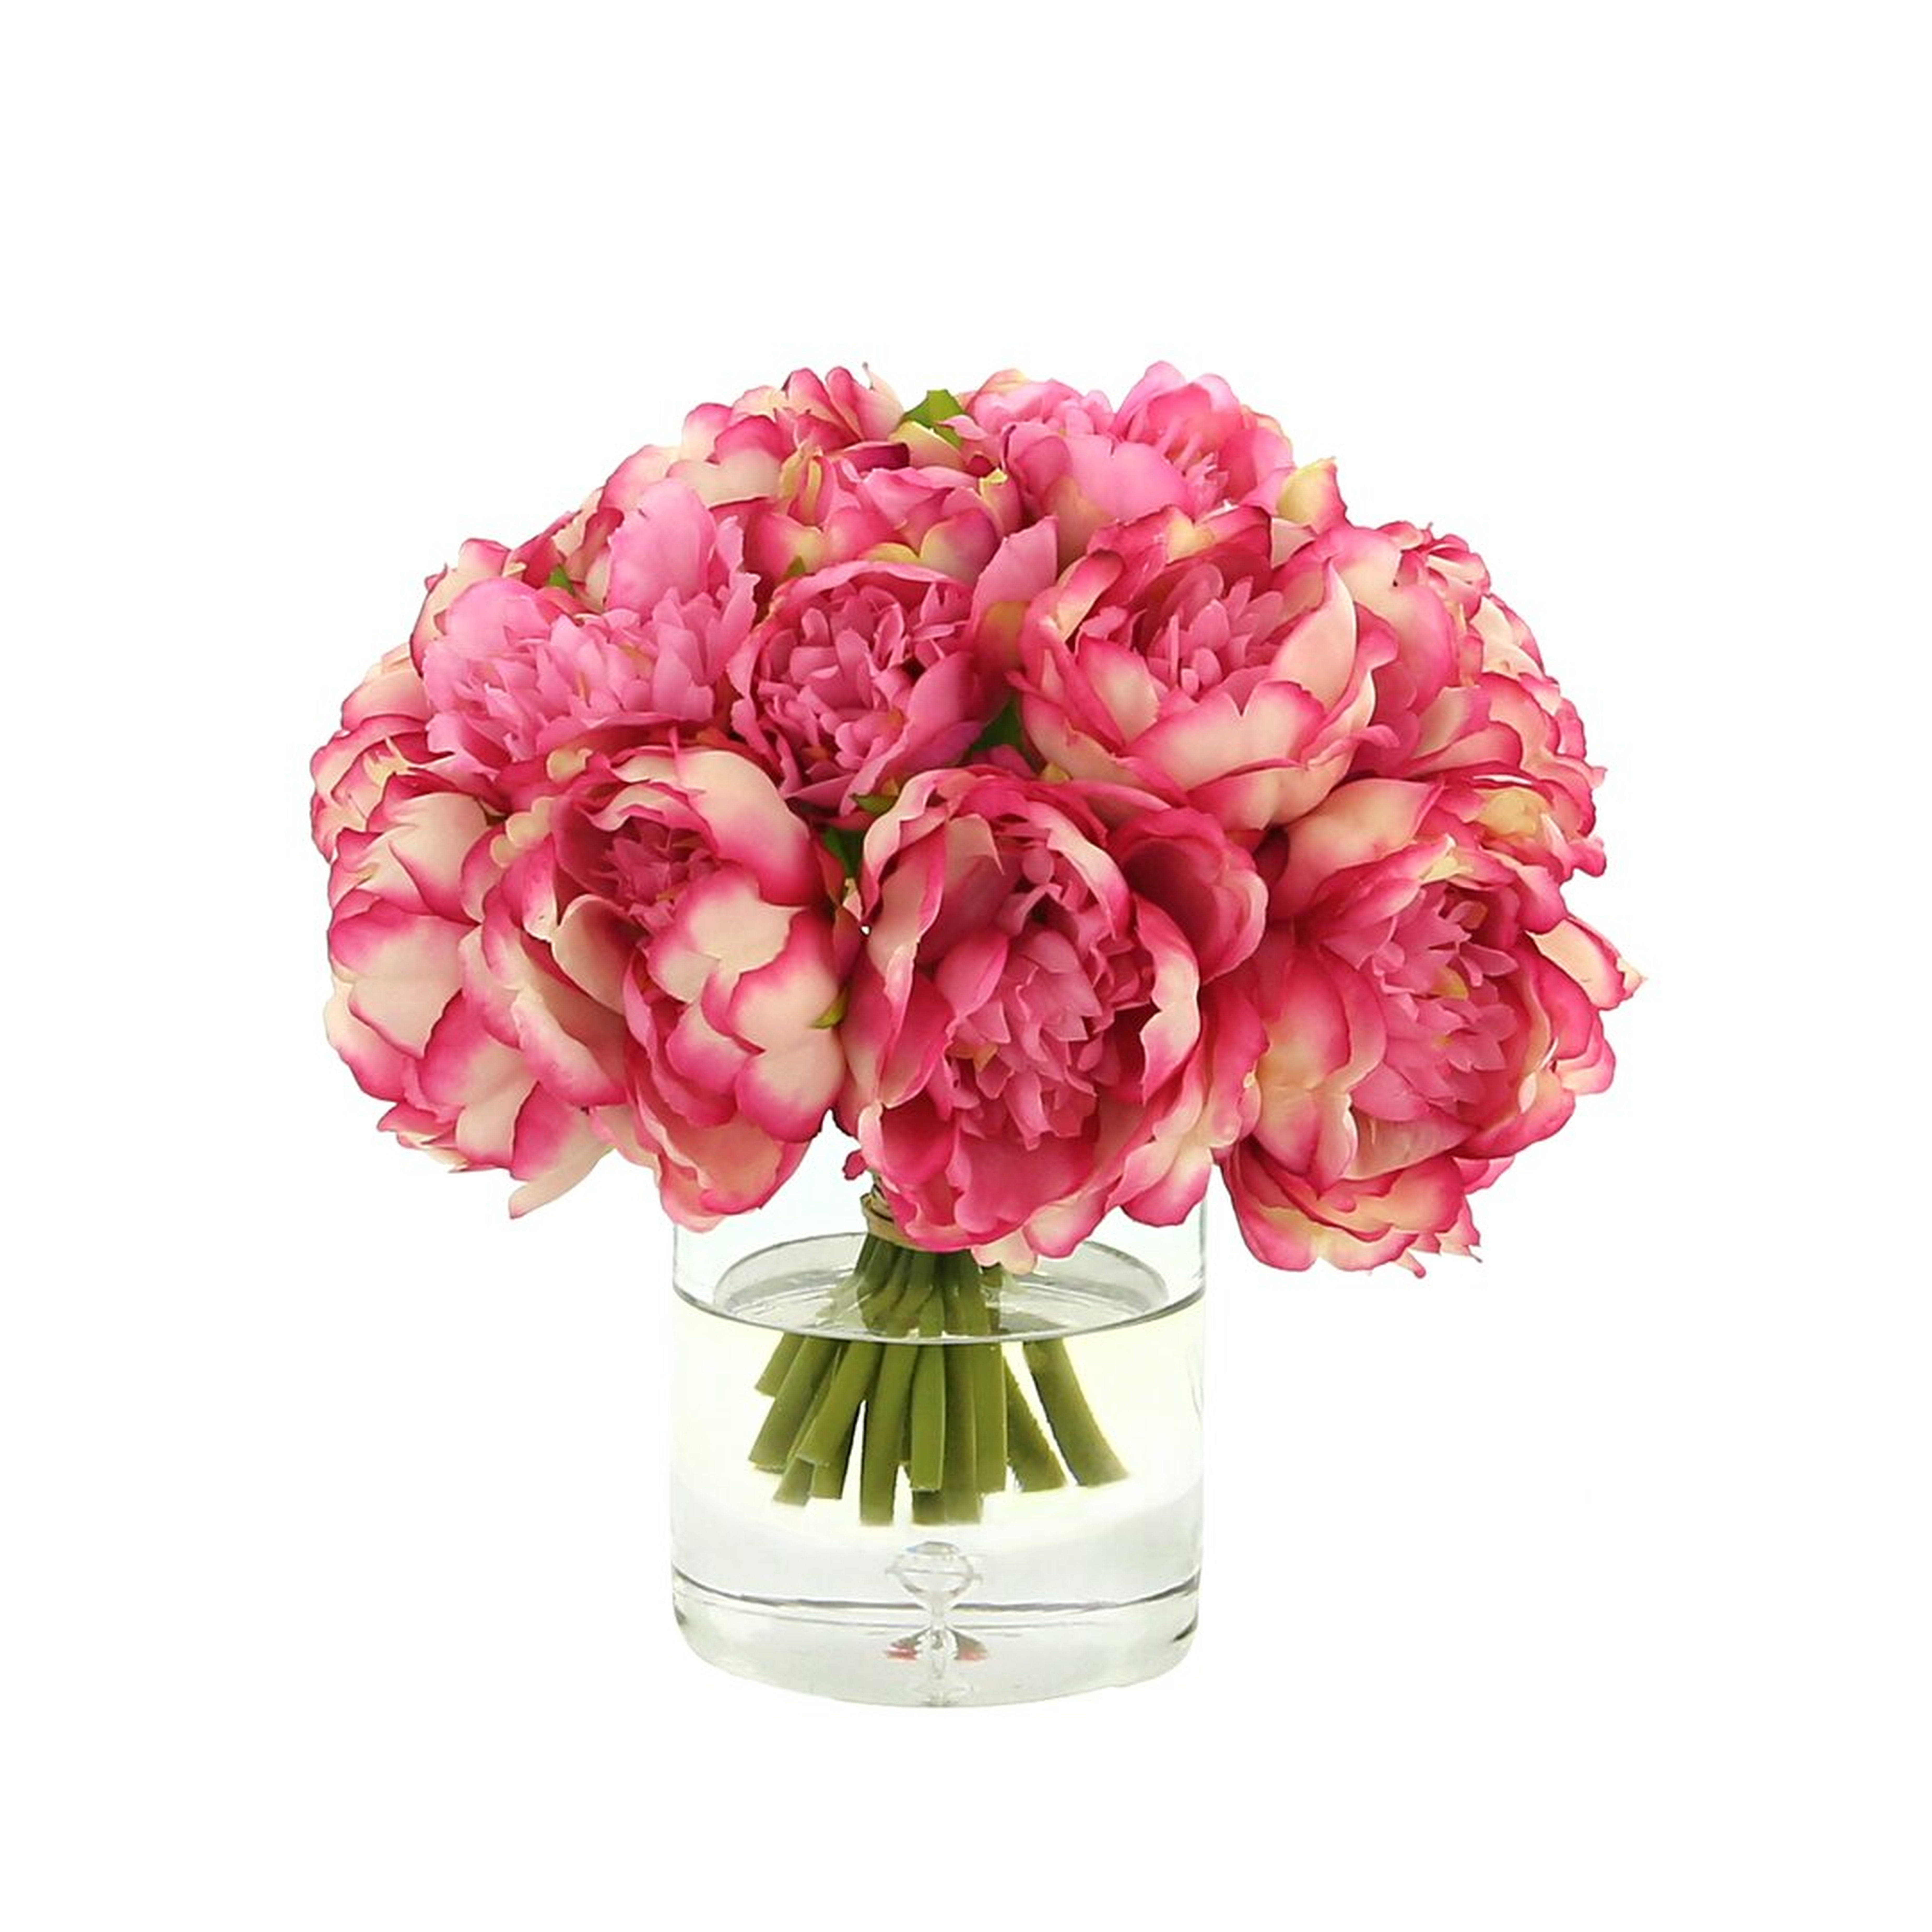 "Creative Displays, Inc. Peonies Floral Arrangement in Vase" - Perigold